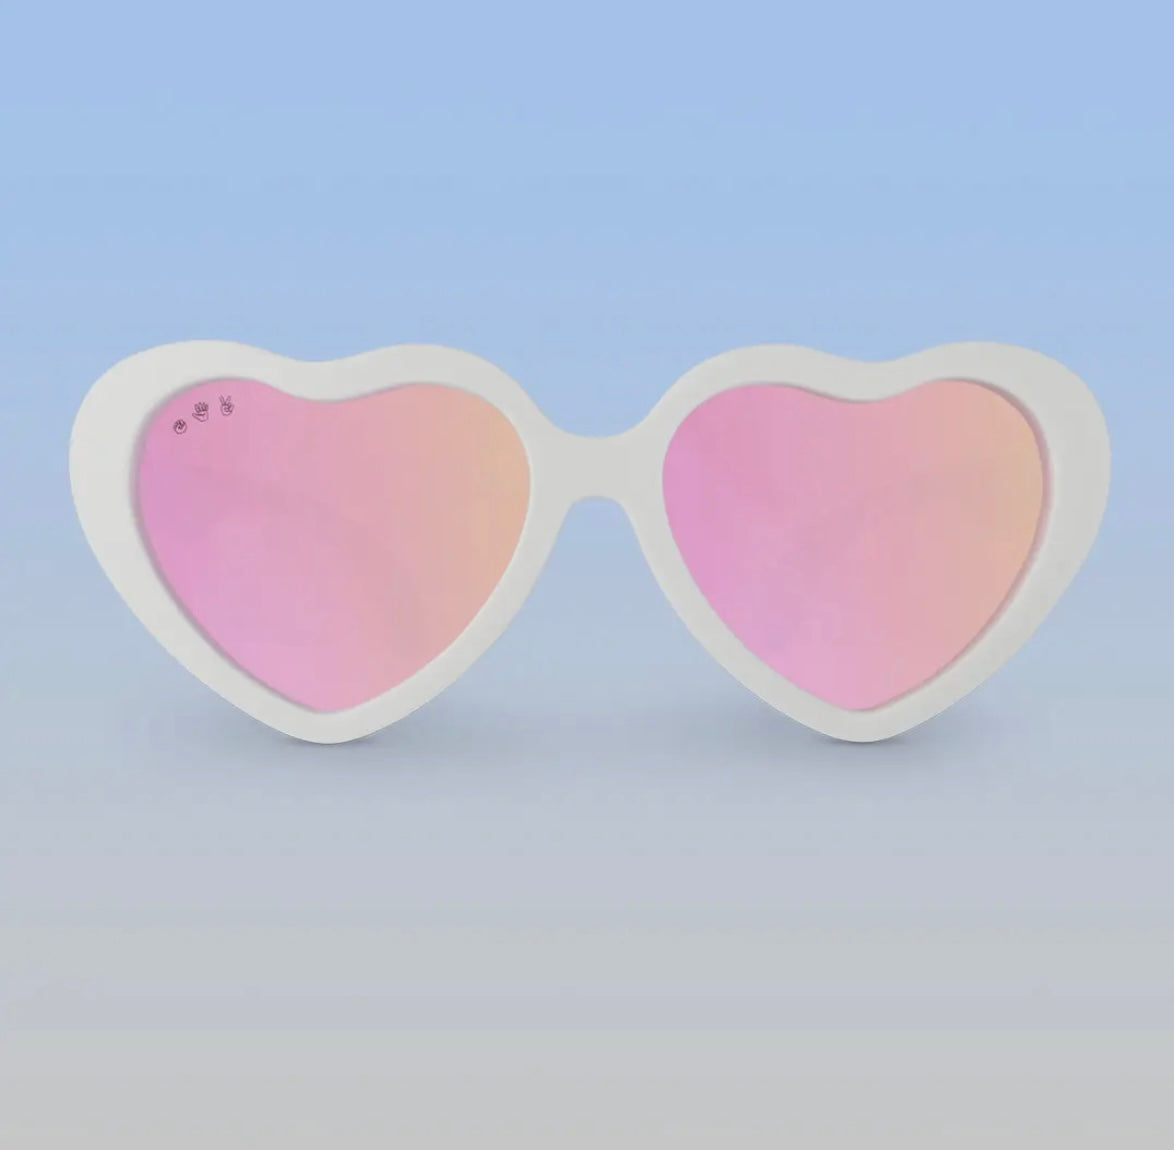 Roshambo Junior Heart Sunglasses - Ice Ice Baby White, Rose Gold Lens